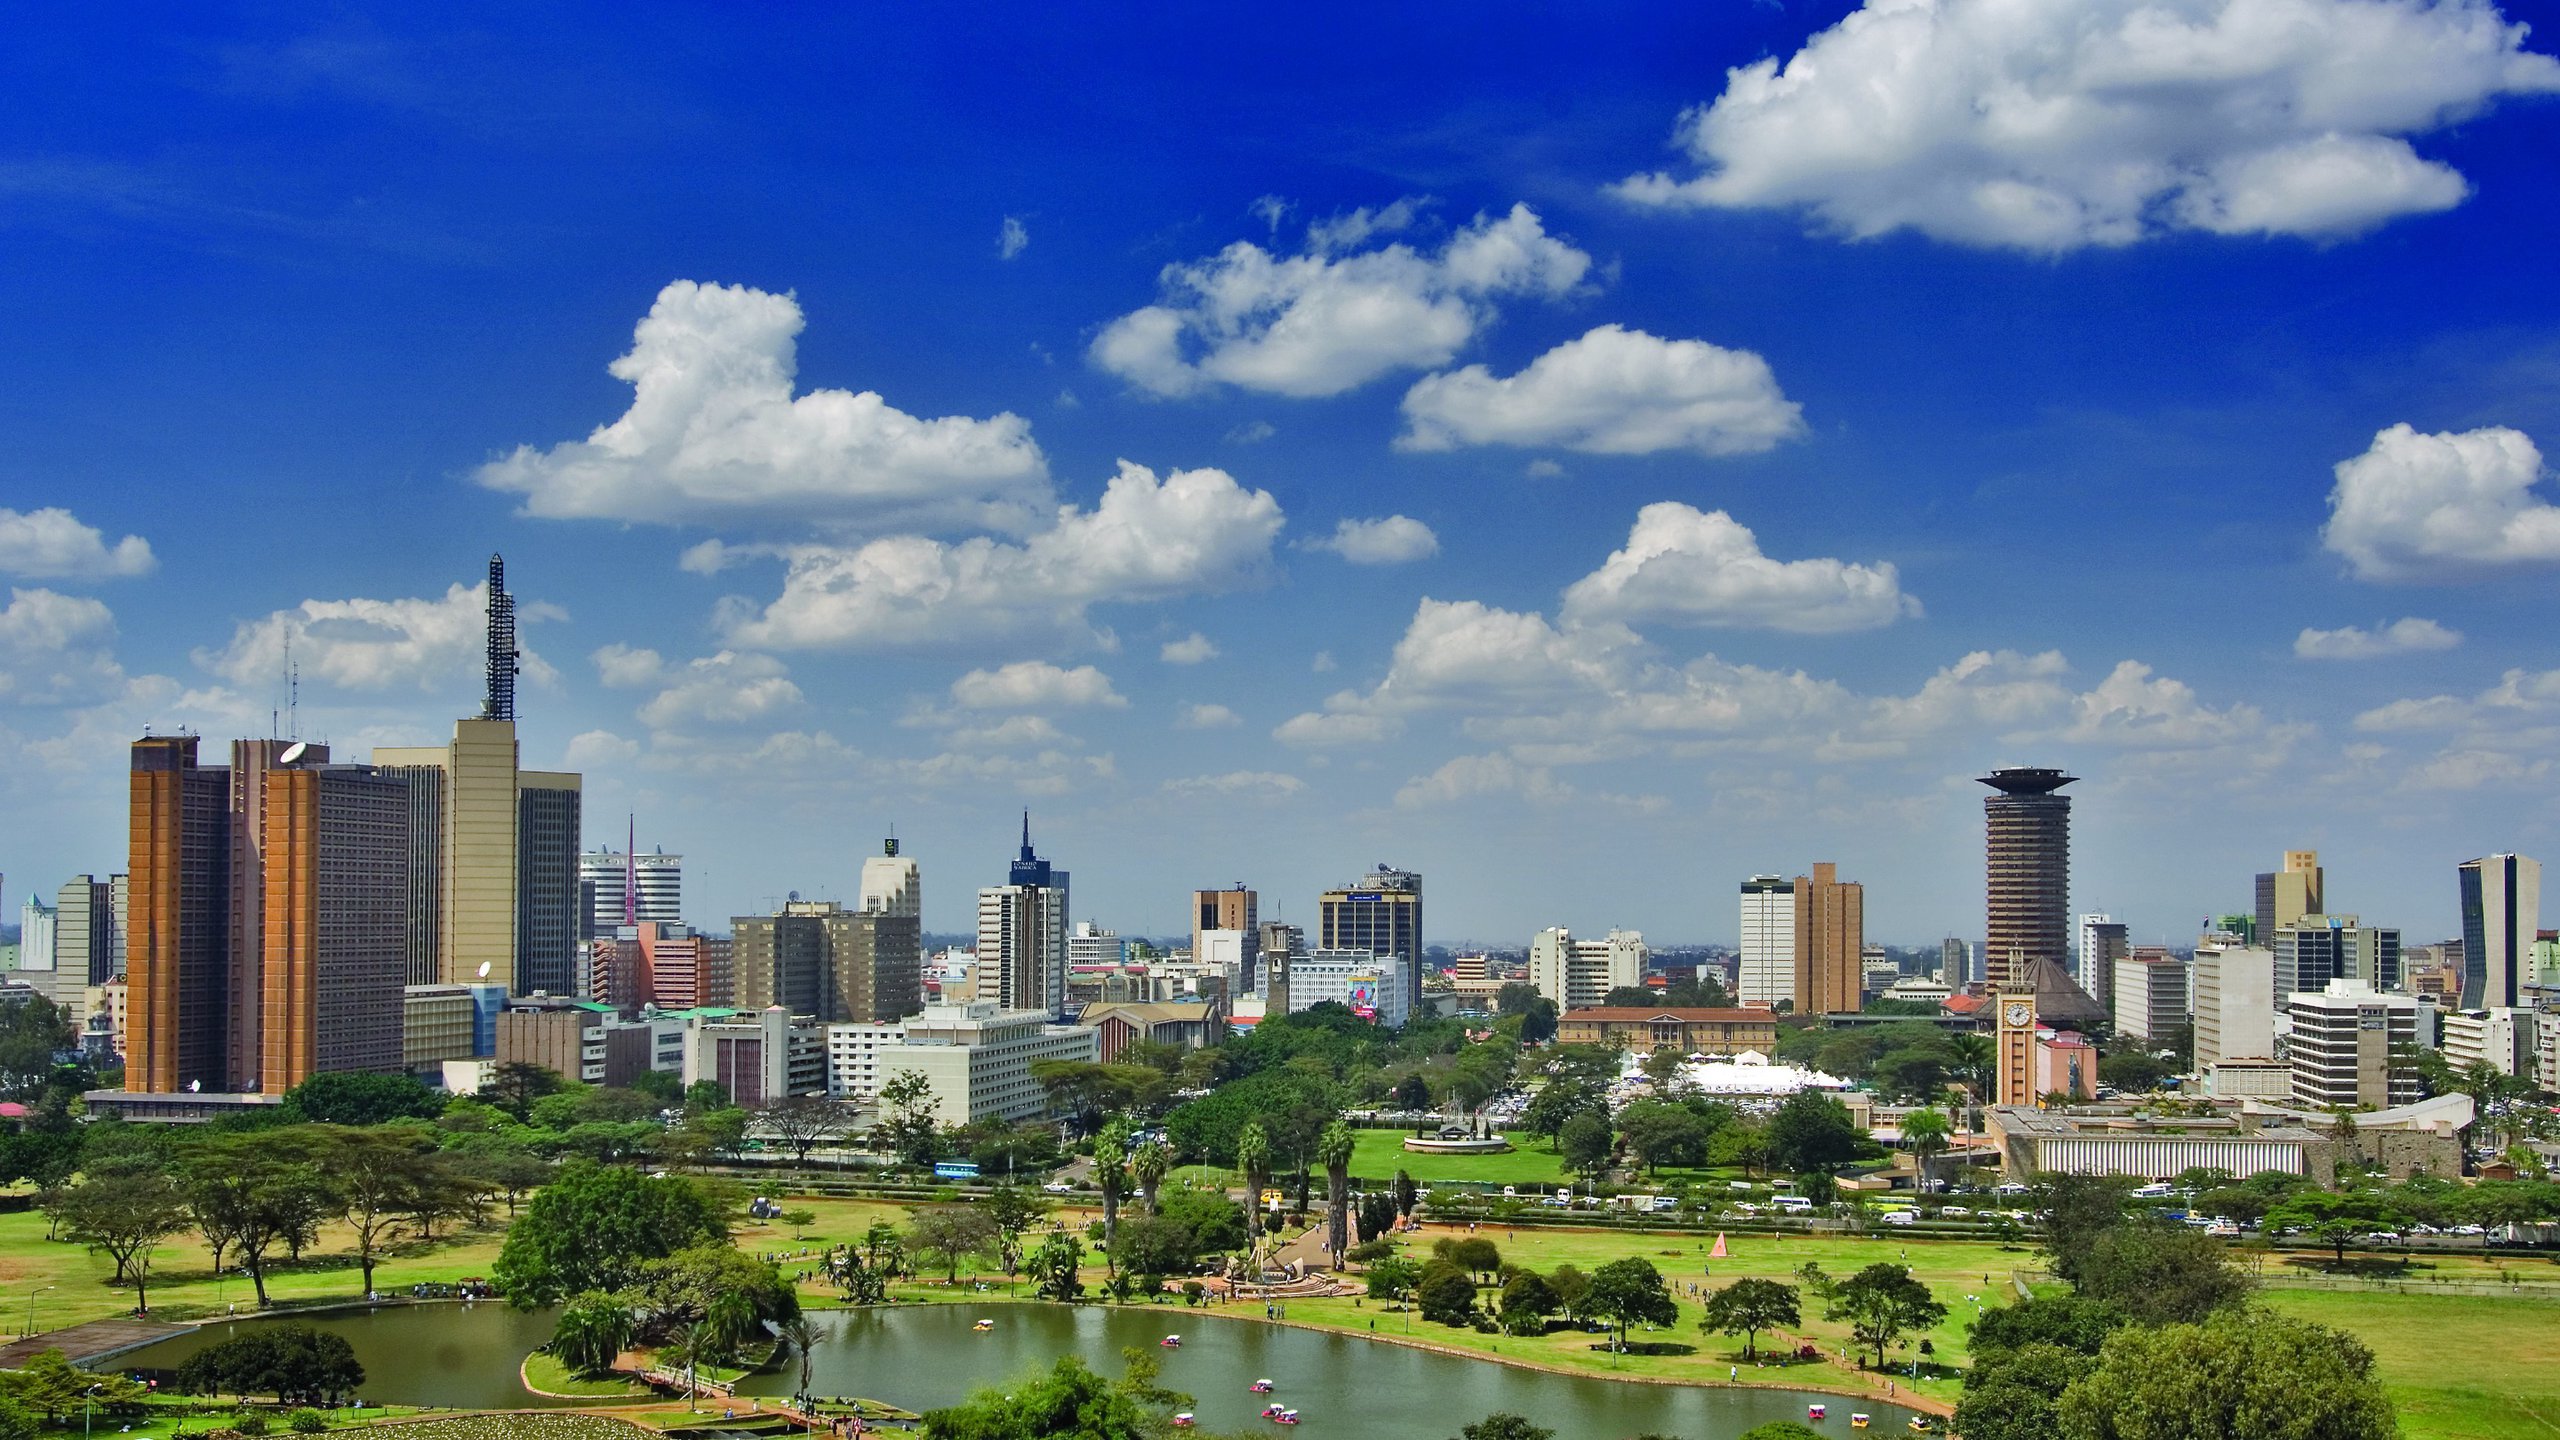 Nairobi, The Capital and Largest City of Kenya